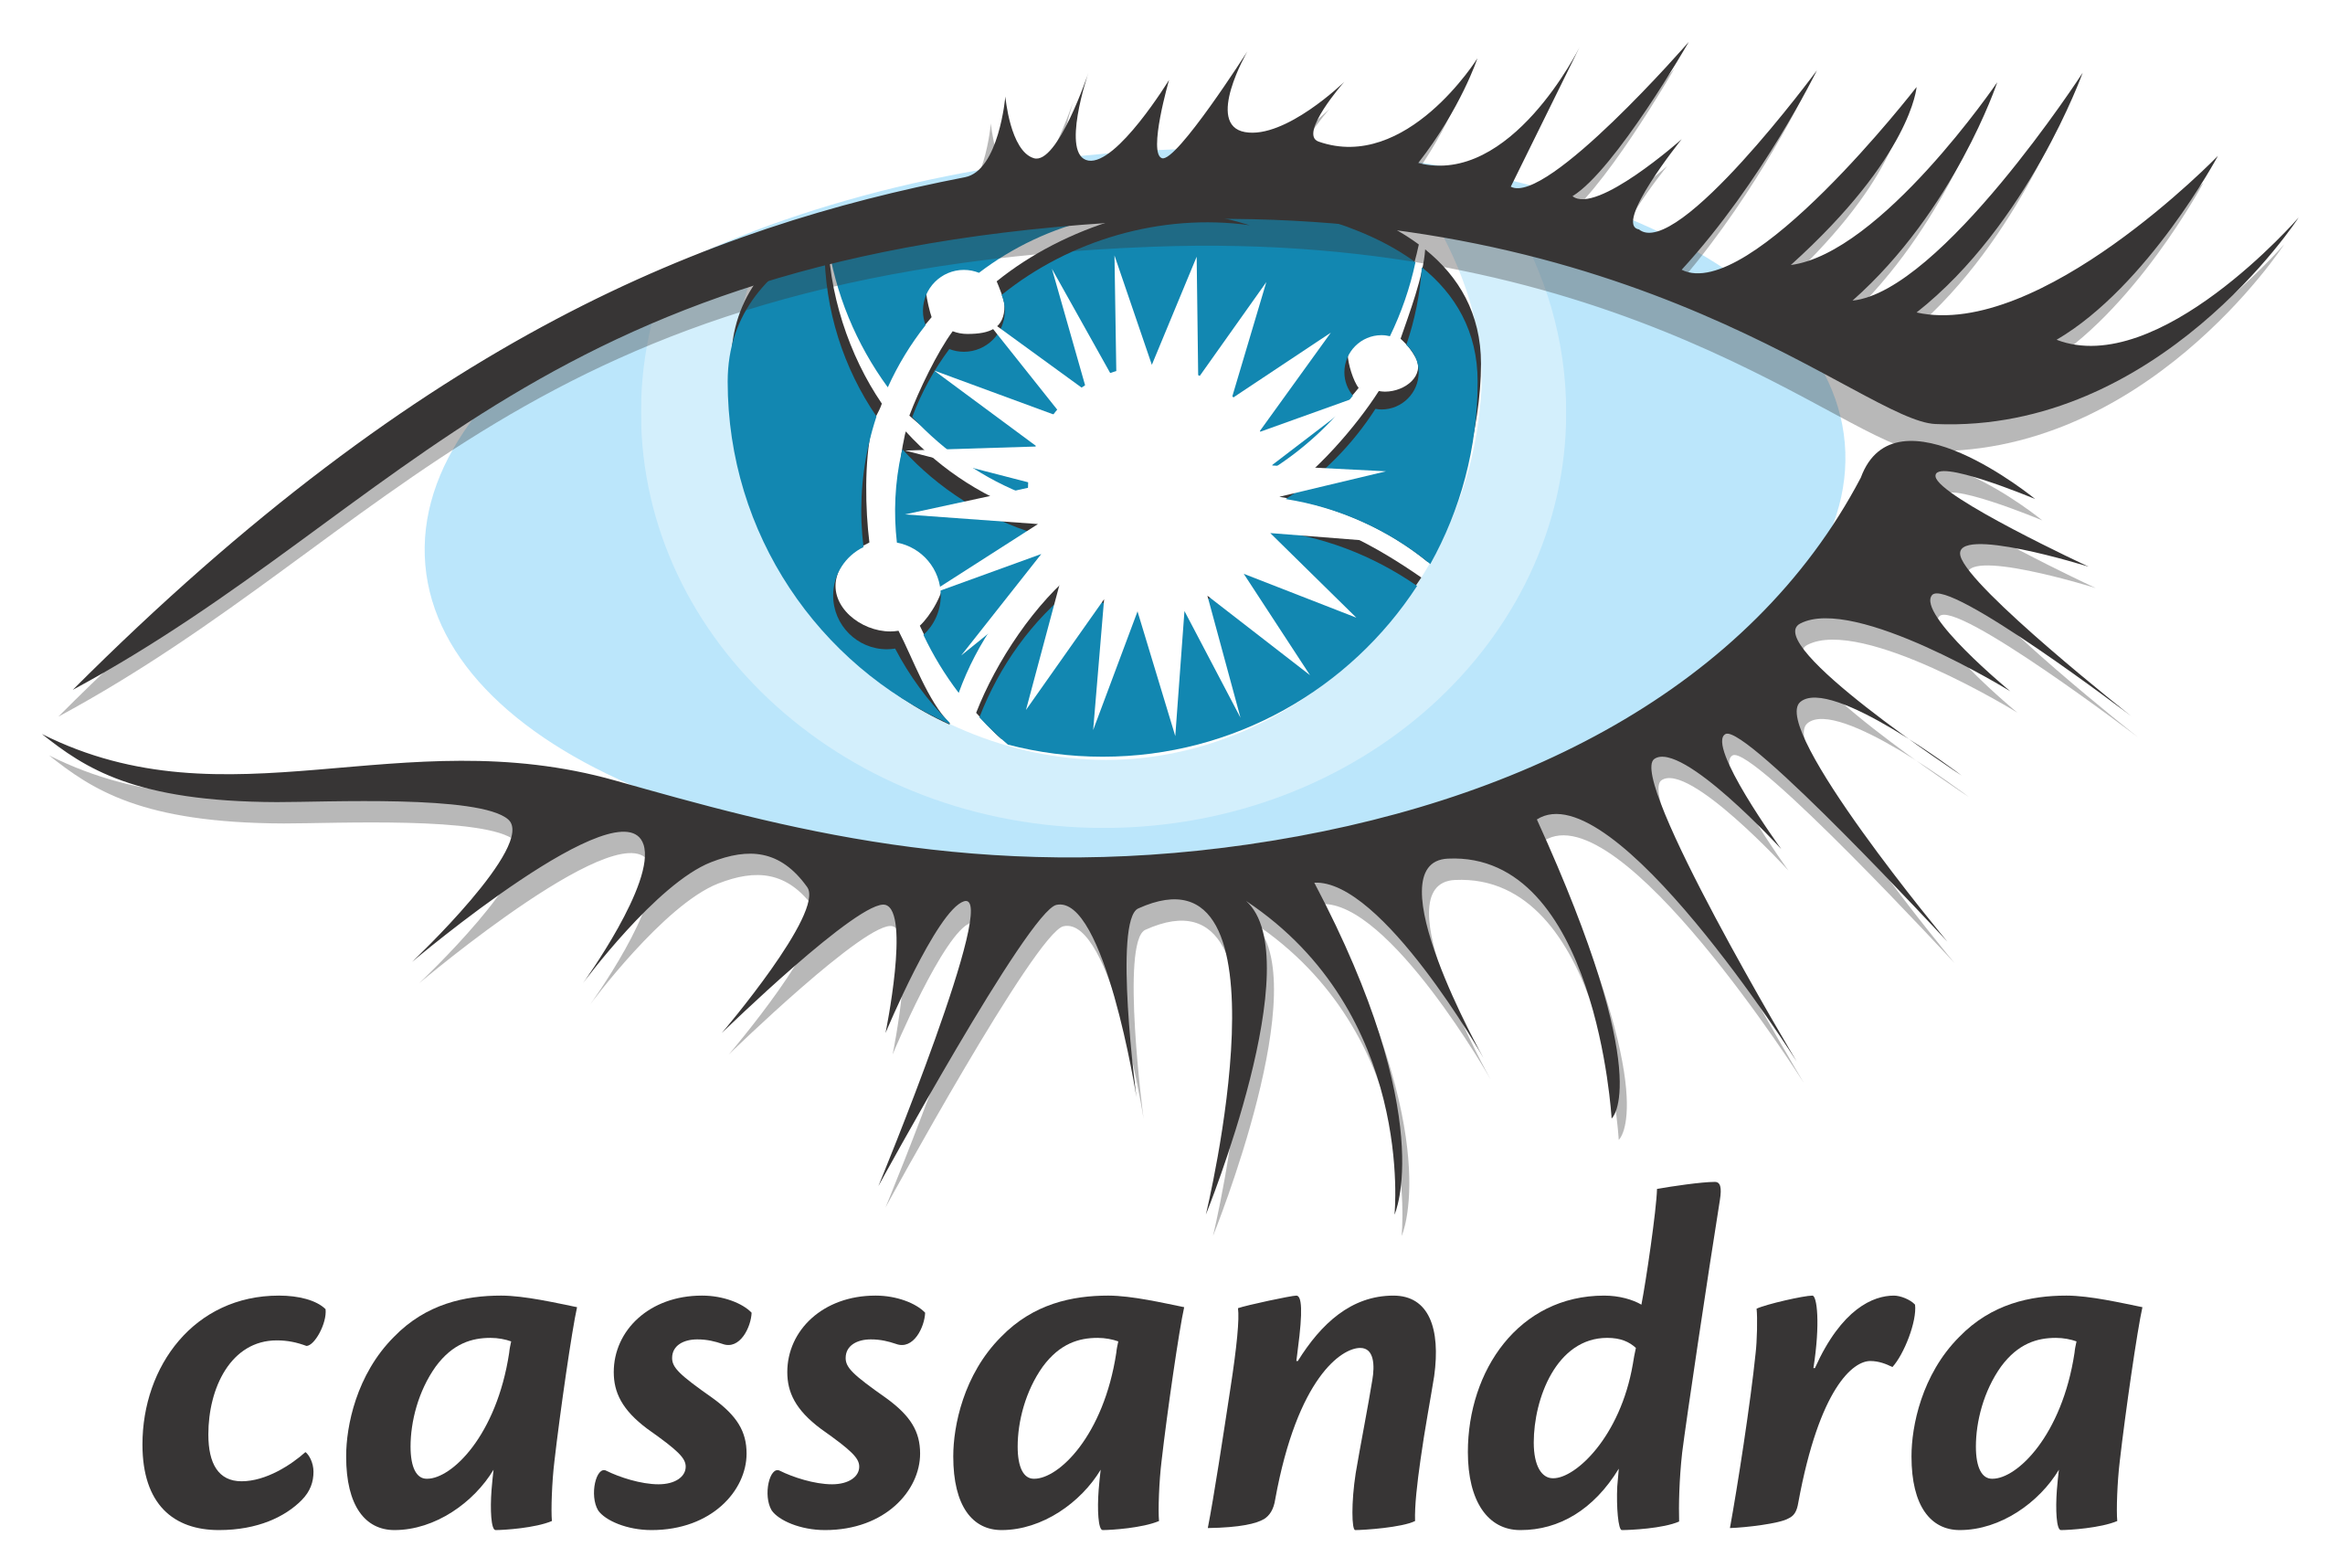 How to Install Cassandra on Ubuntu 18.04 Bionic LTS - Featured